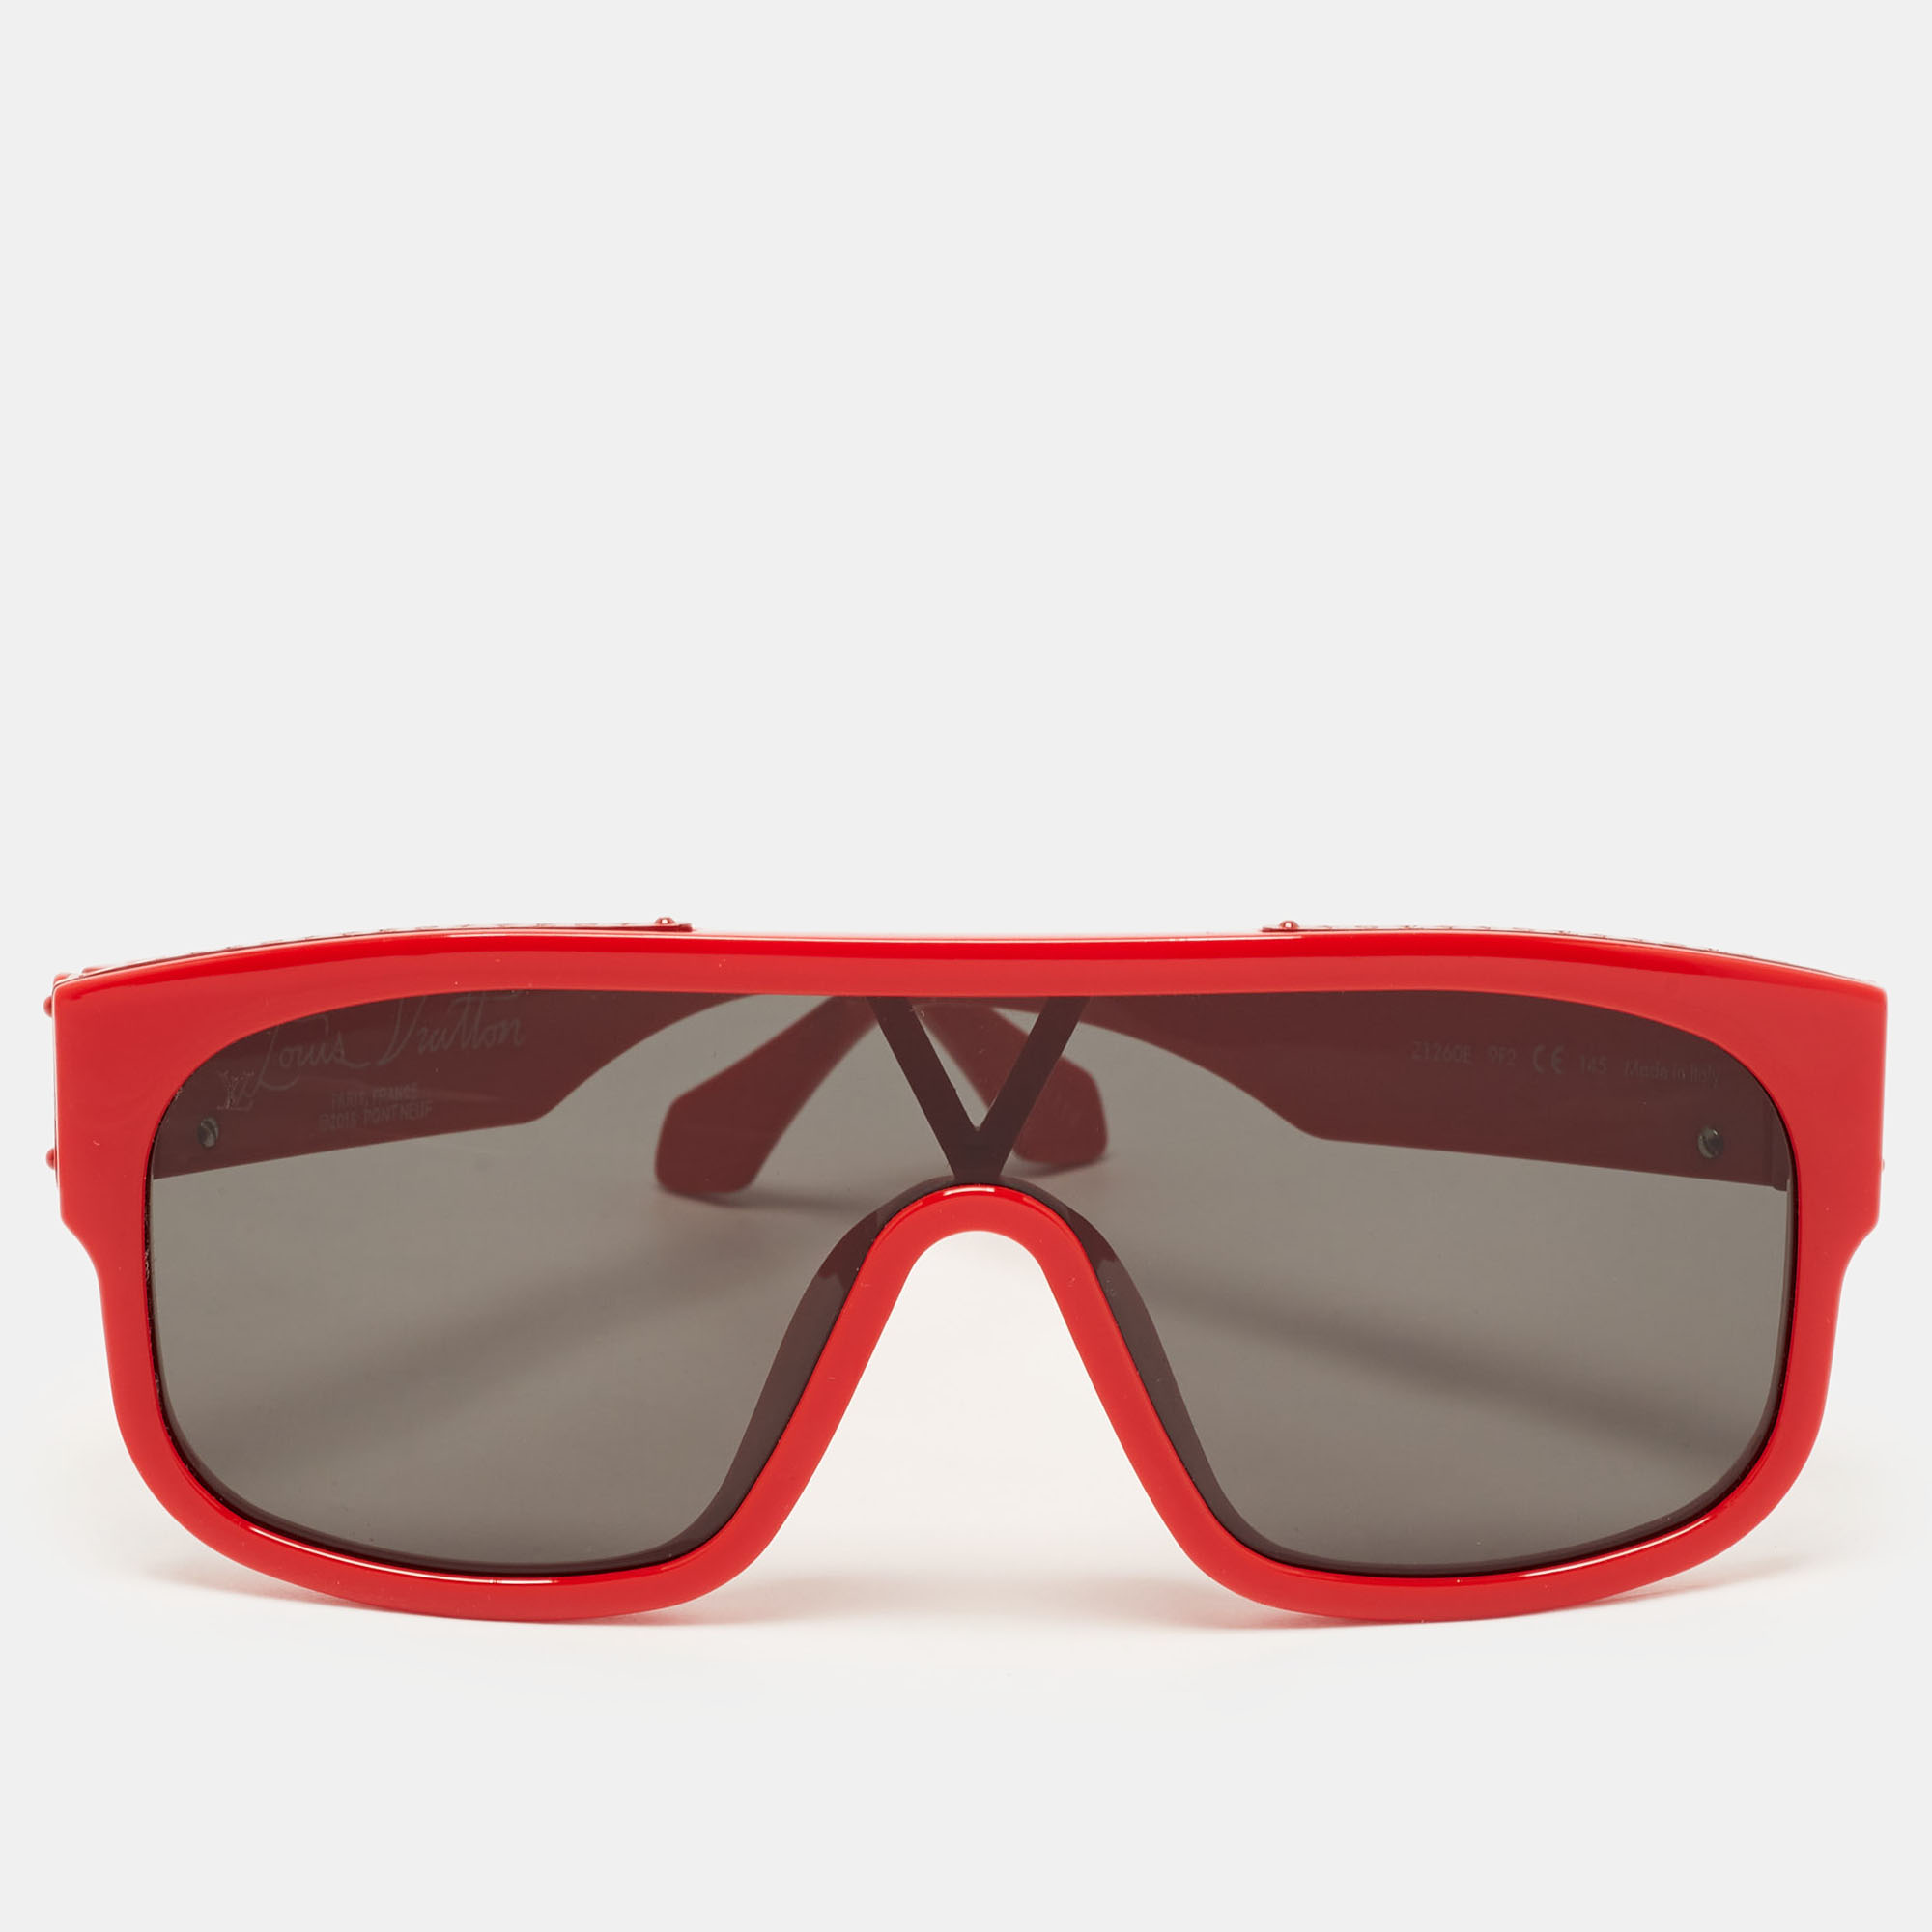 Louis Vuitton 2015 Evidence Sunglasses